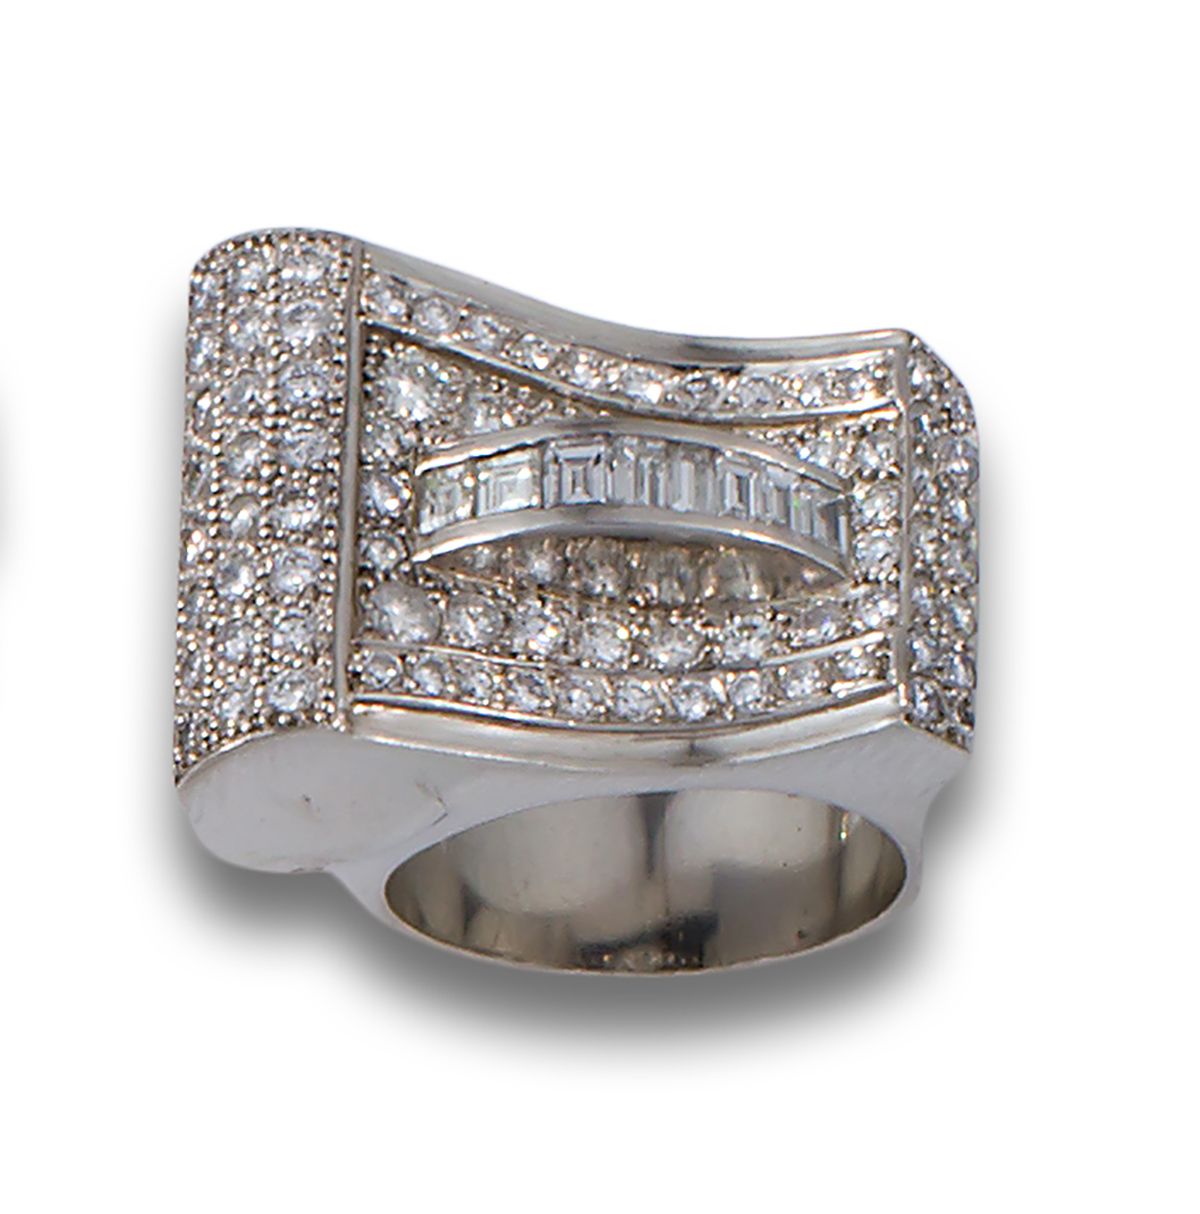 CHEVALIER PLATINUM AND DIAMONDS RING Platinum chevalier ring, comprising a buckl&hellip;